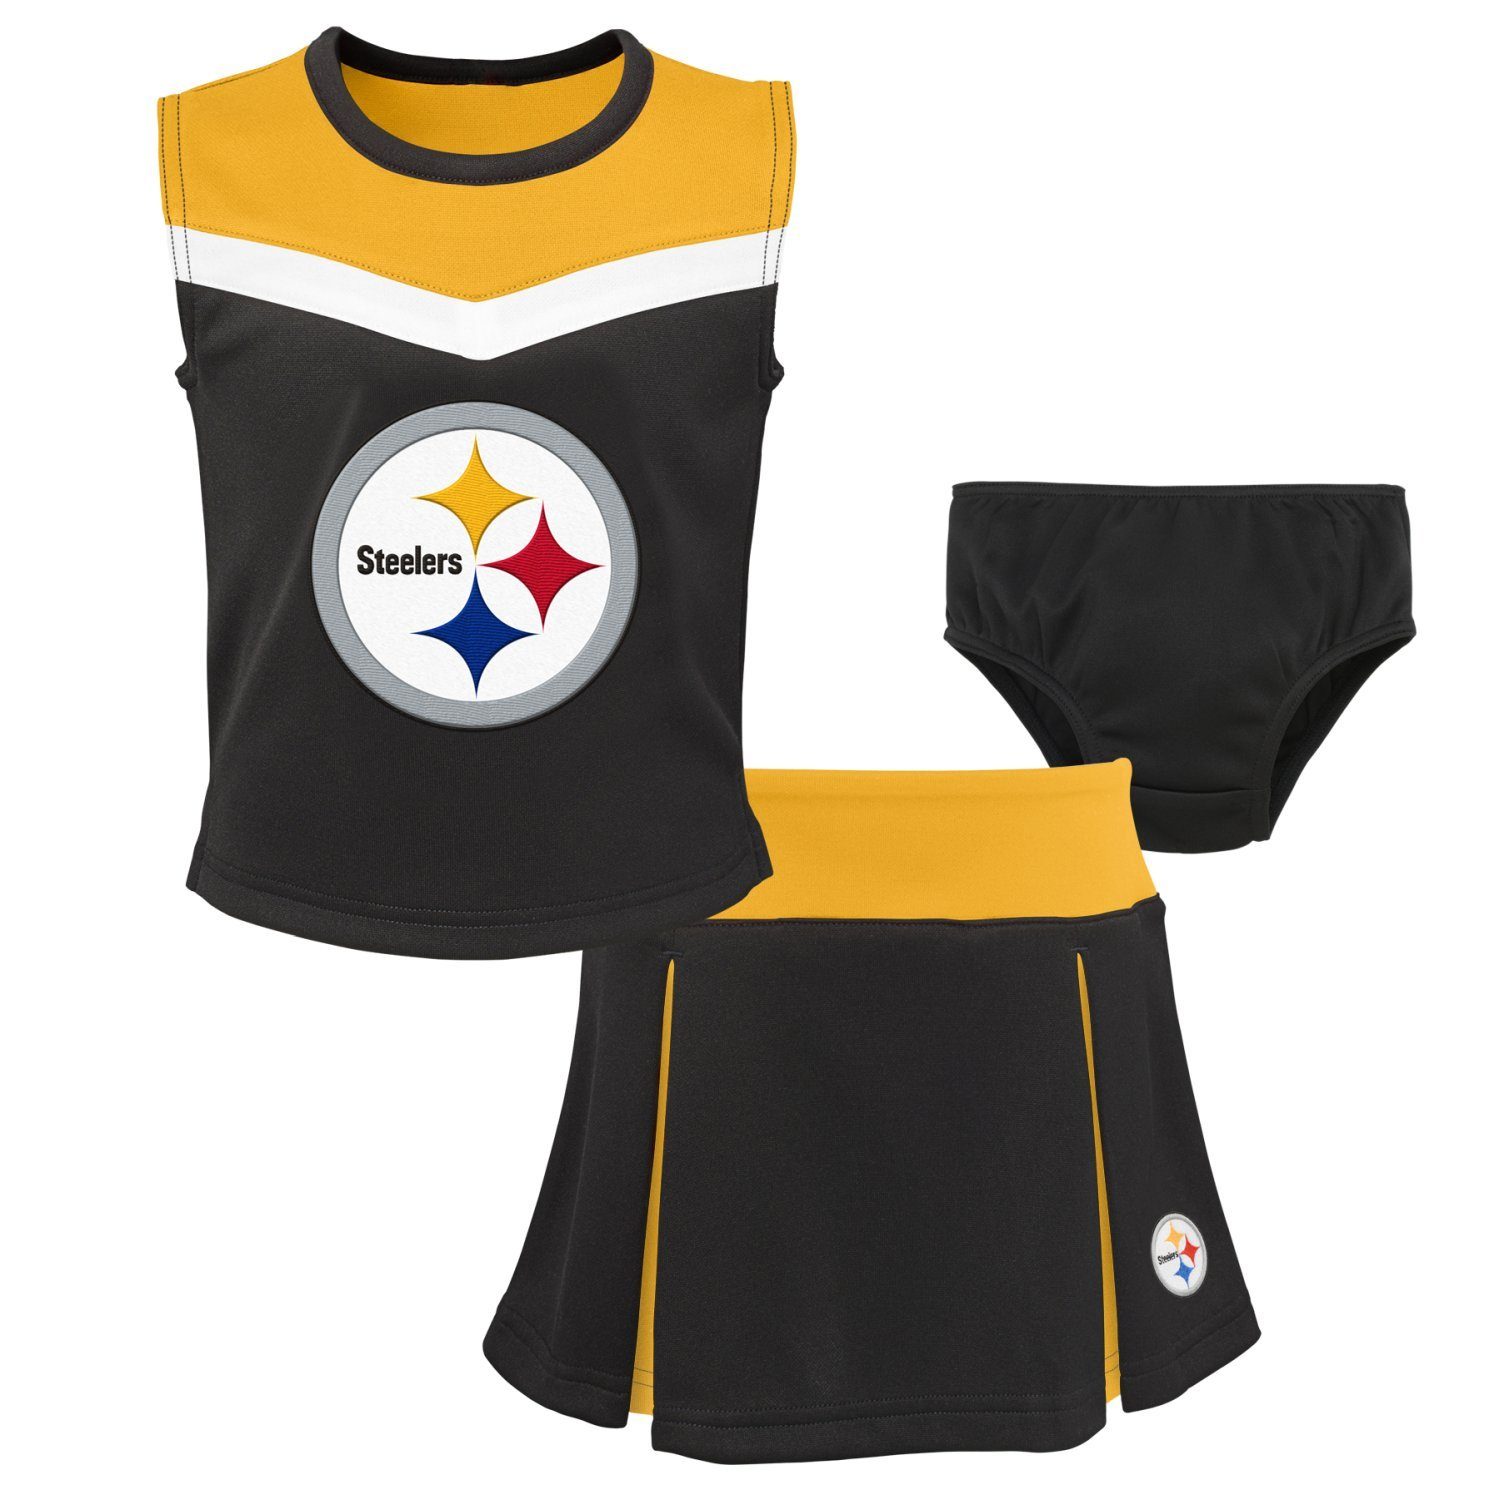 Outerstuff Print-Shirt NFL Pittsburgh Set Cheerleader Steelers